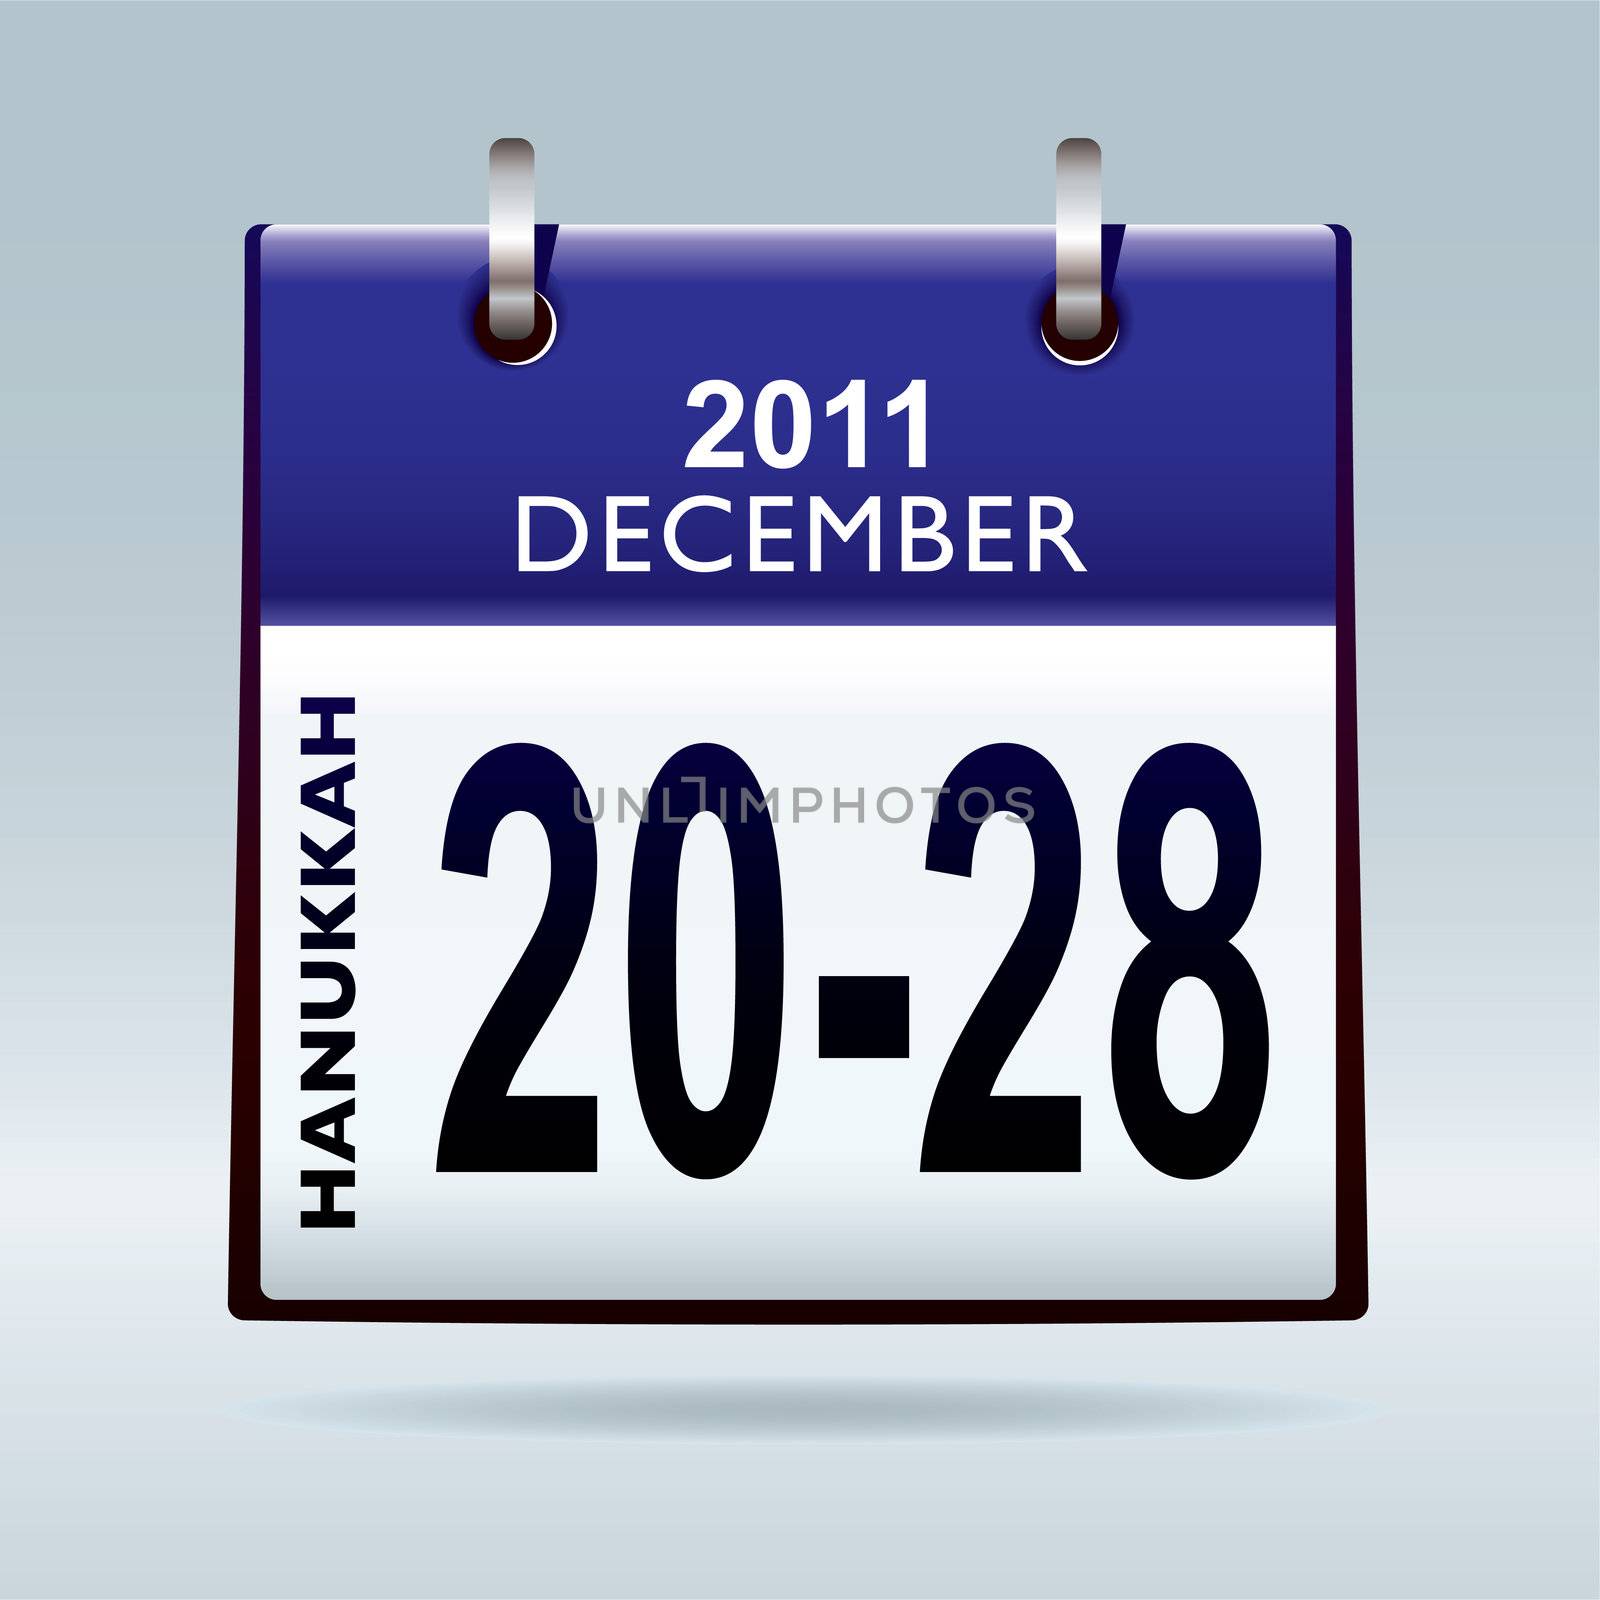 Jewish hanukkah 2011 dates in december with blue calendar